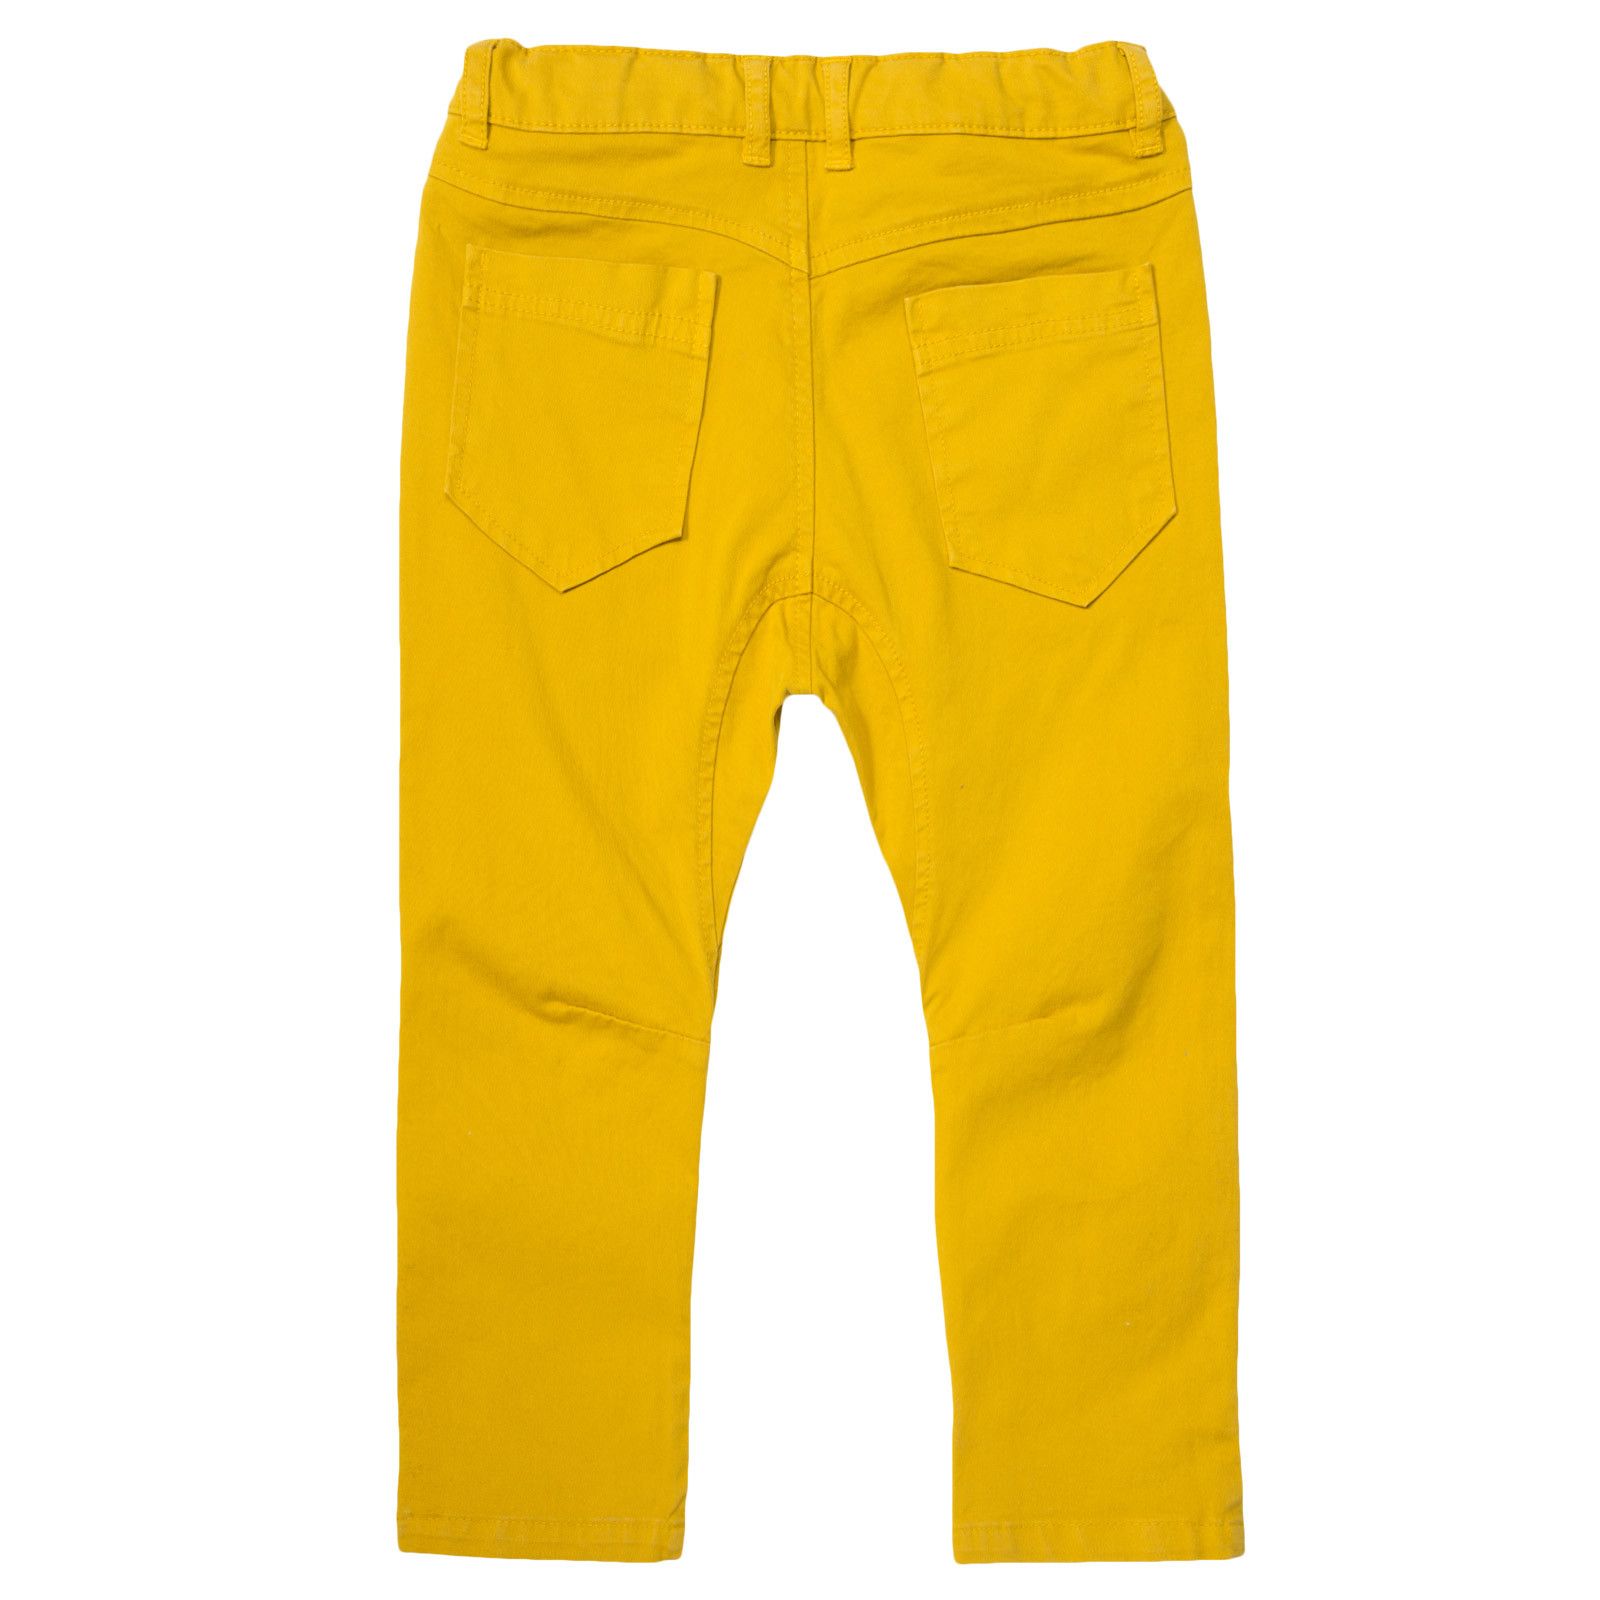 Boys Yellow Slim Fit Cotton Trousers - CÉMAROSE | Children's Fashion Store - 2